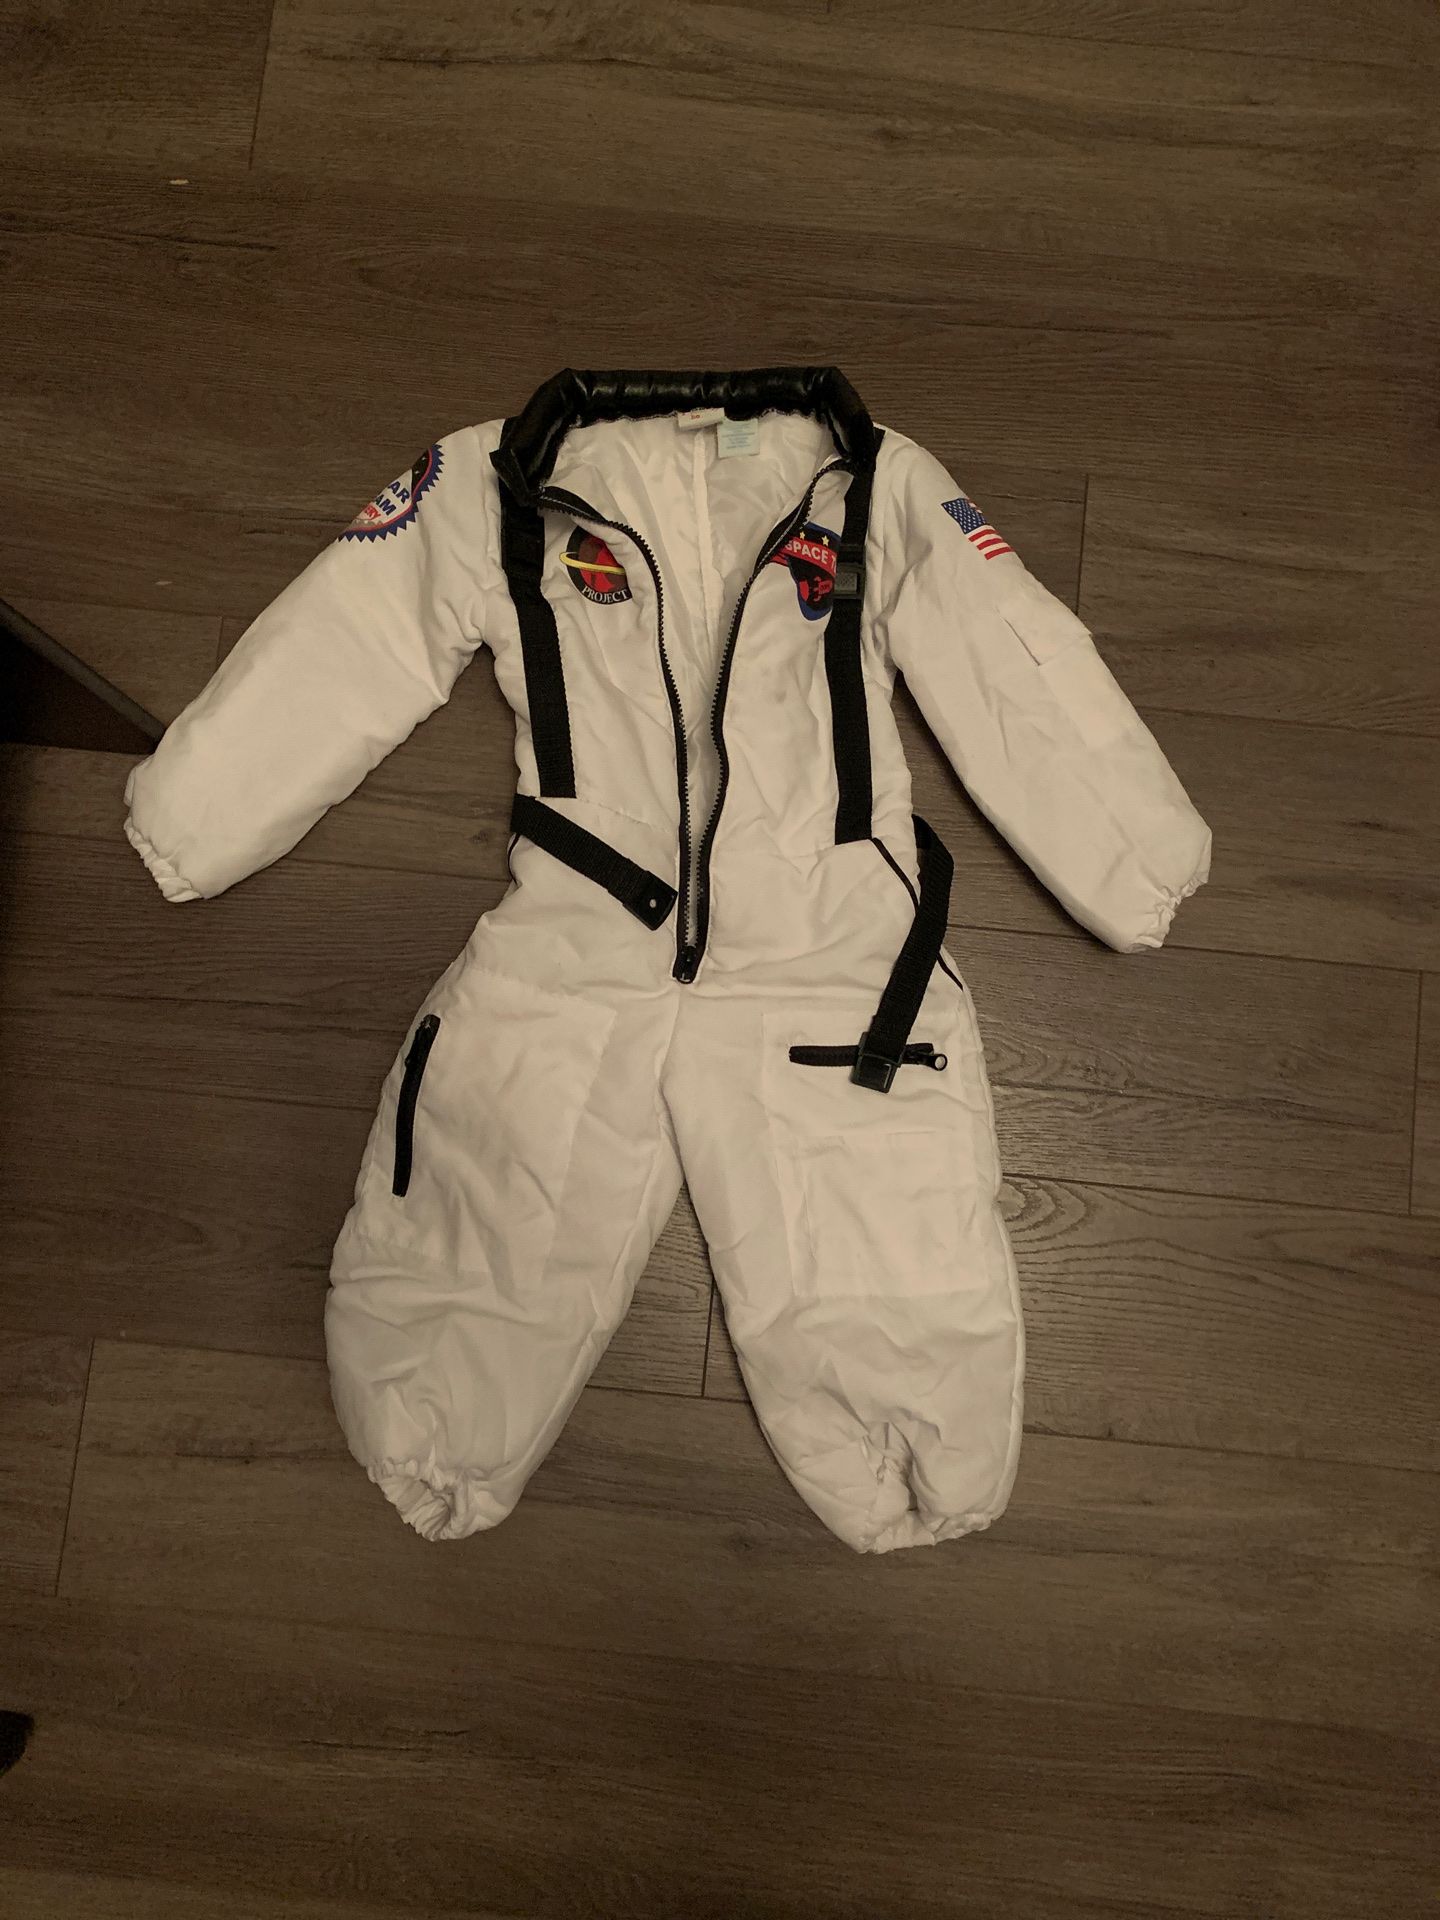 NASA costume size 3/4